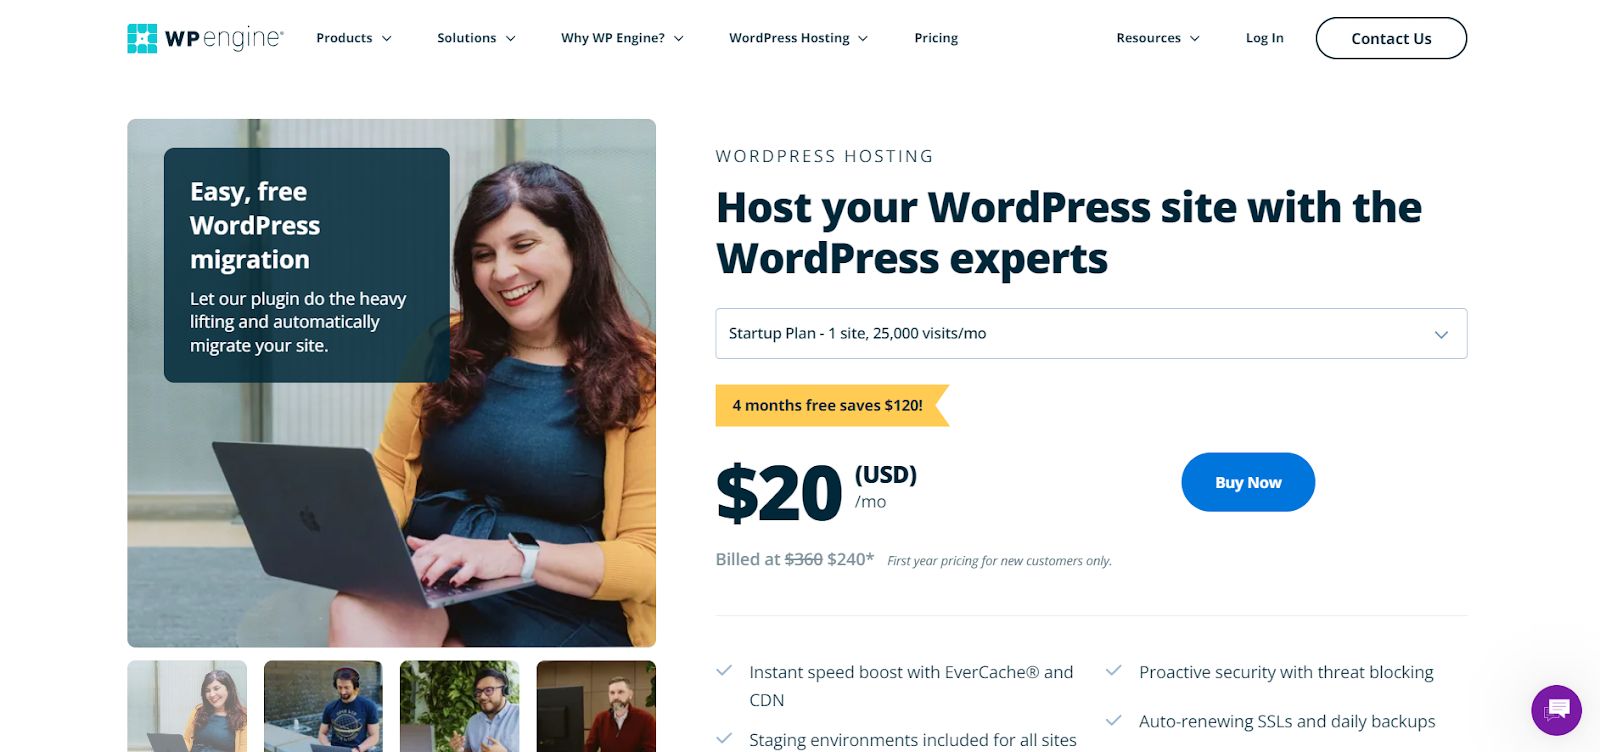 WP Engine WordPress hosting page.